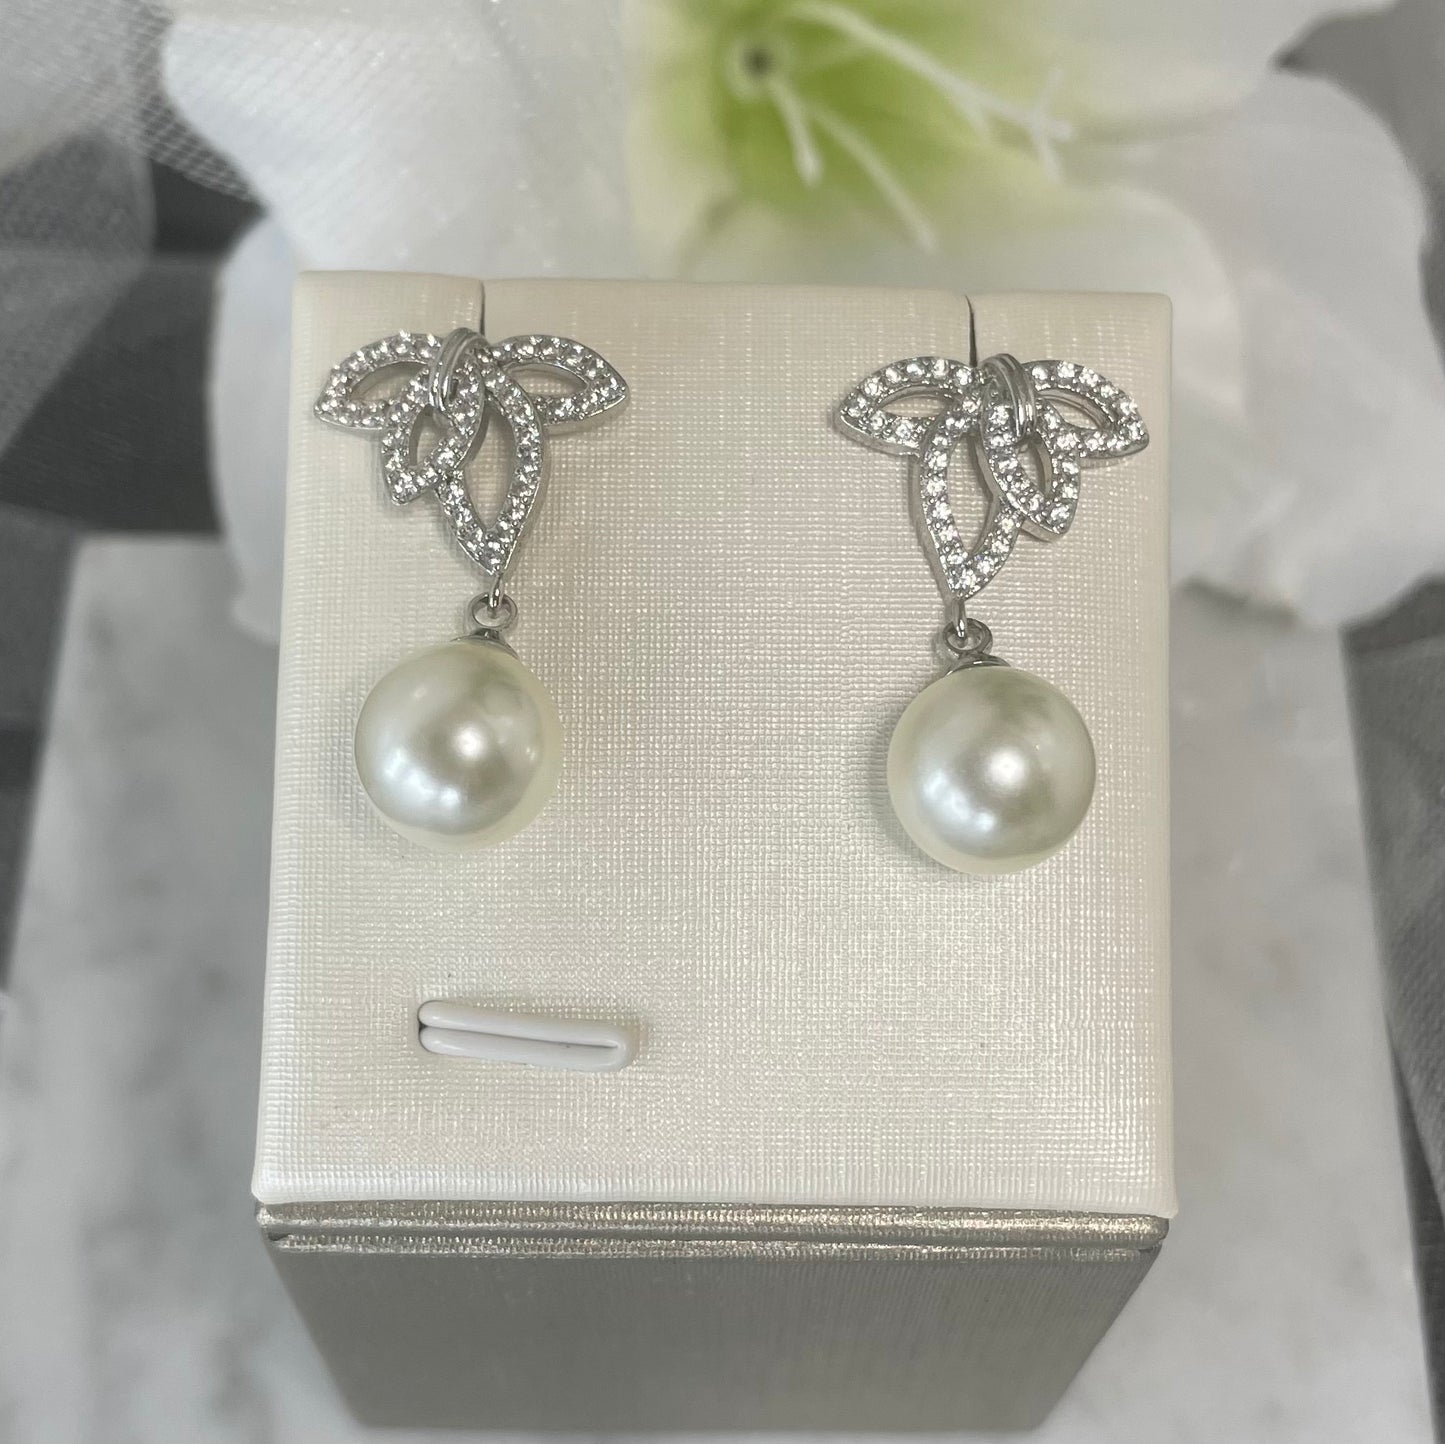 Belmont crystal pearl earrings